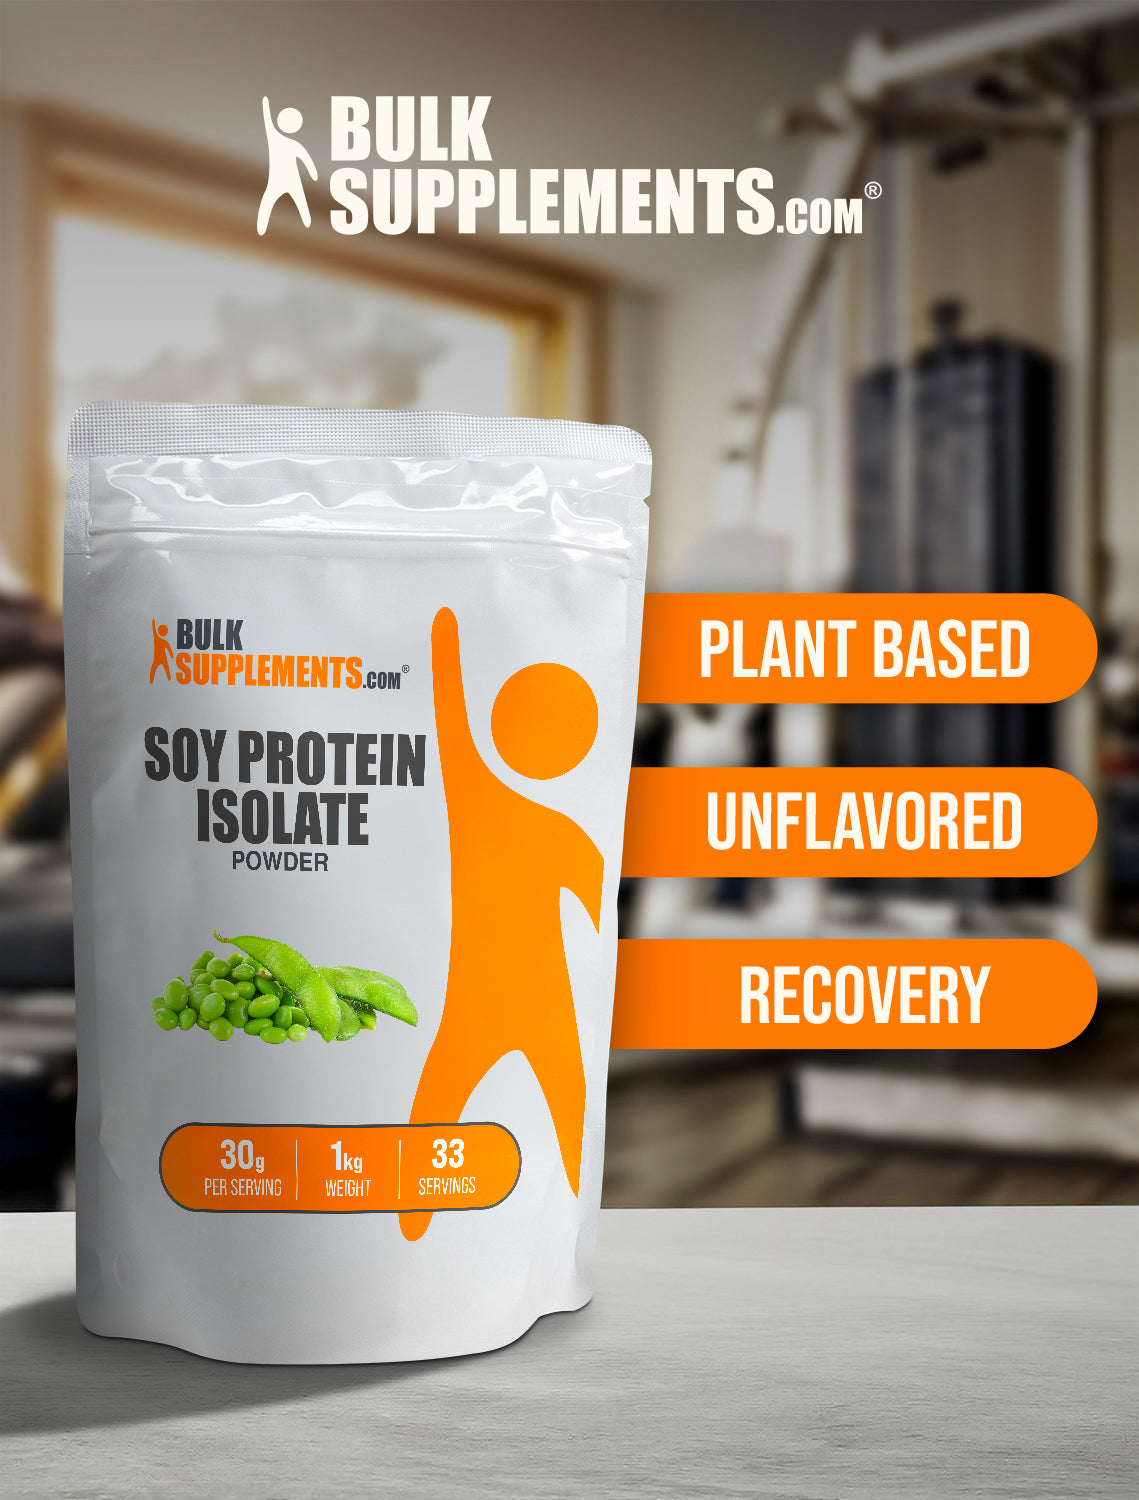 Soy protein isolate powder 1kg keywords image